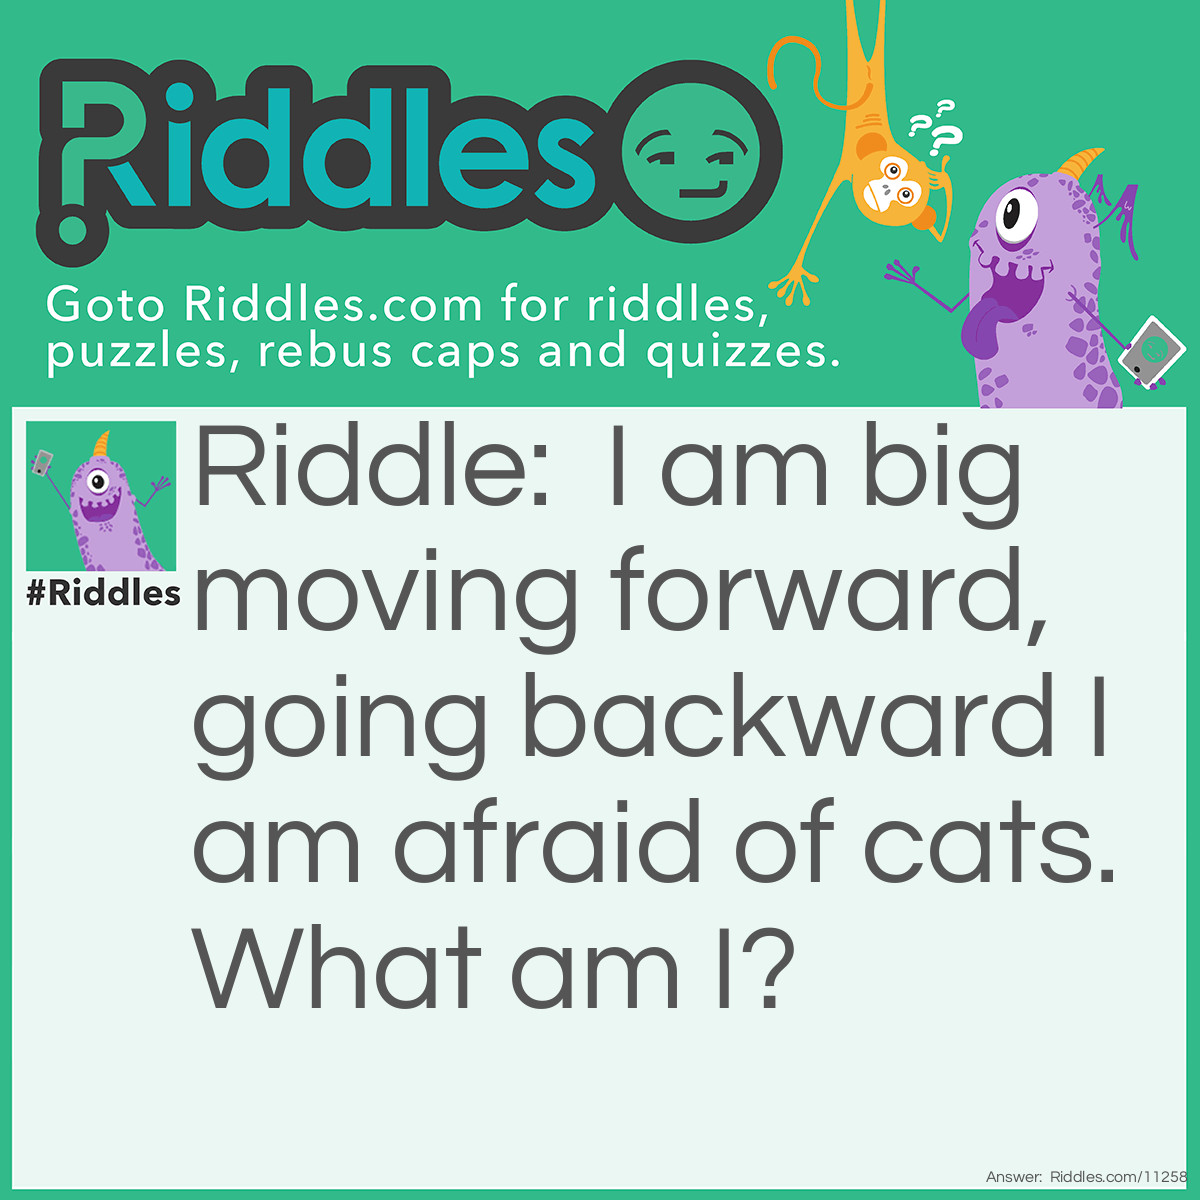 Riddle: I am big moving forward, going backward I am afraid of cats. What am I? Answer: Tar.